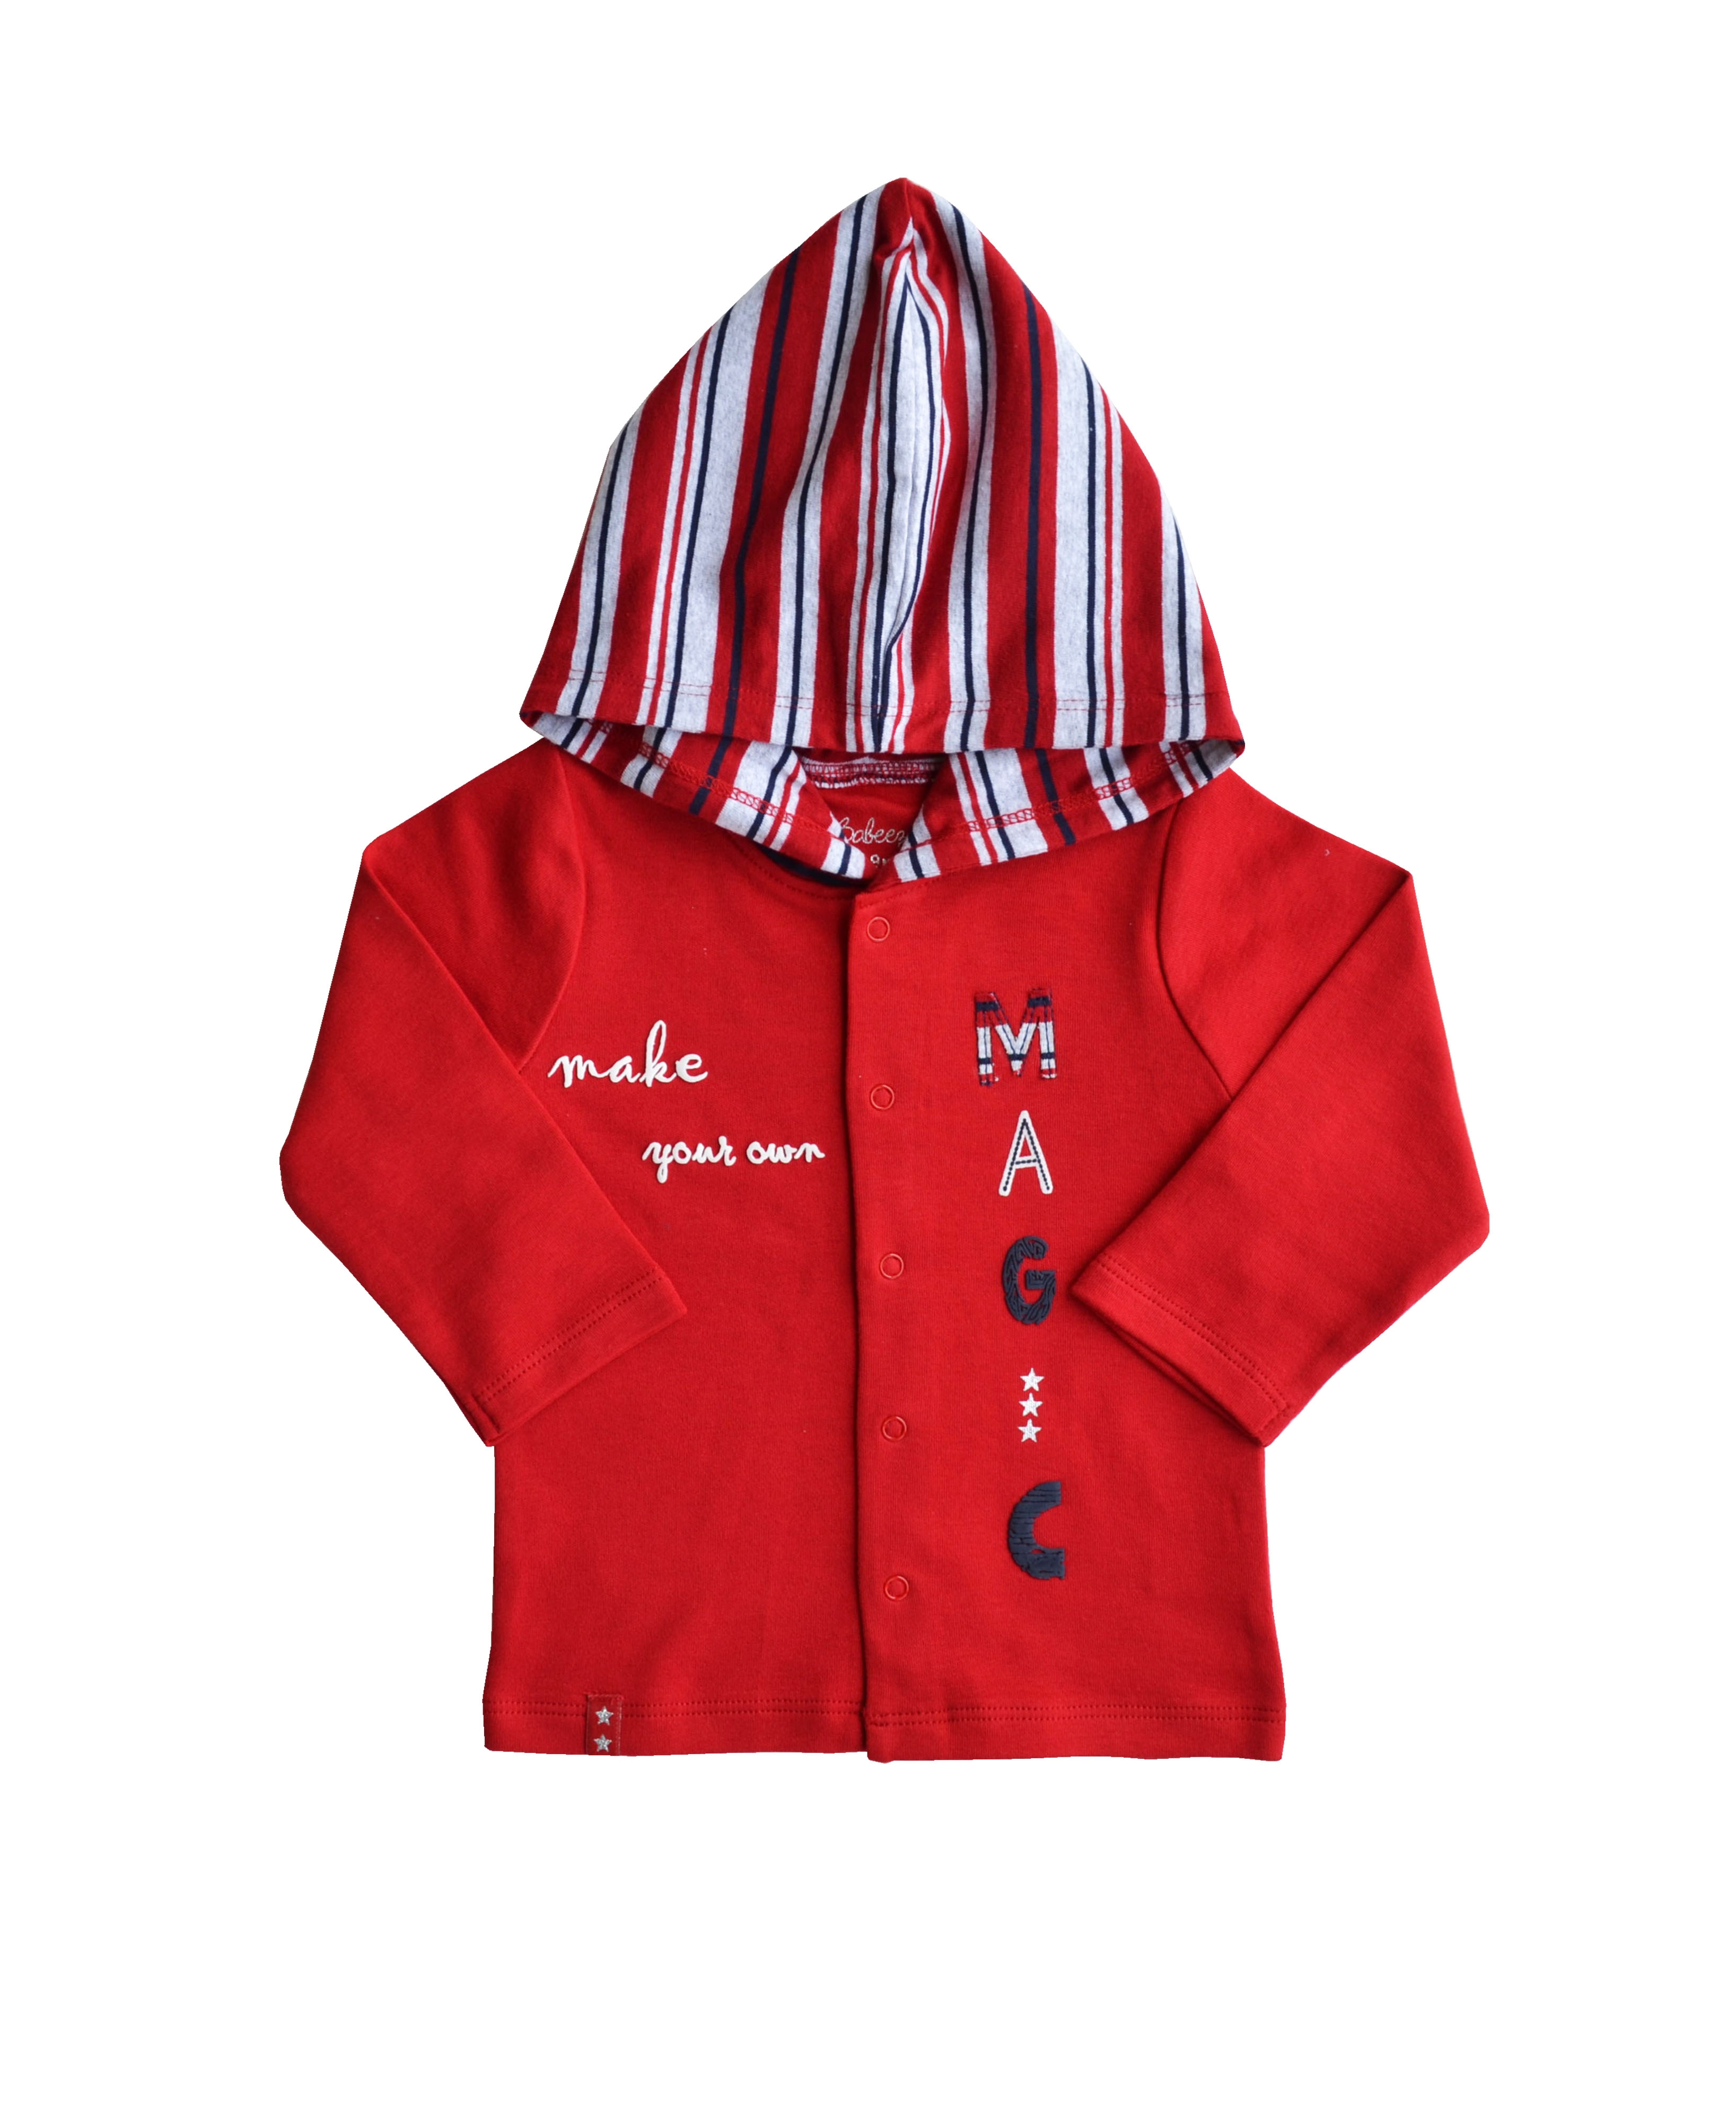 Babeez | MAGIC applique on Red Long Sleeves Hoody Jacket(100% Cotton Interlock Biowash) undefined